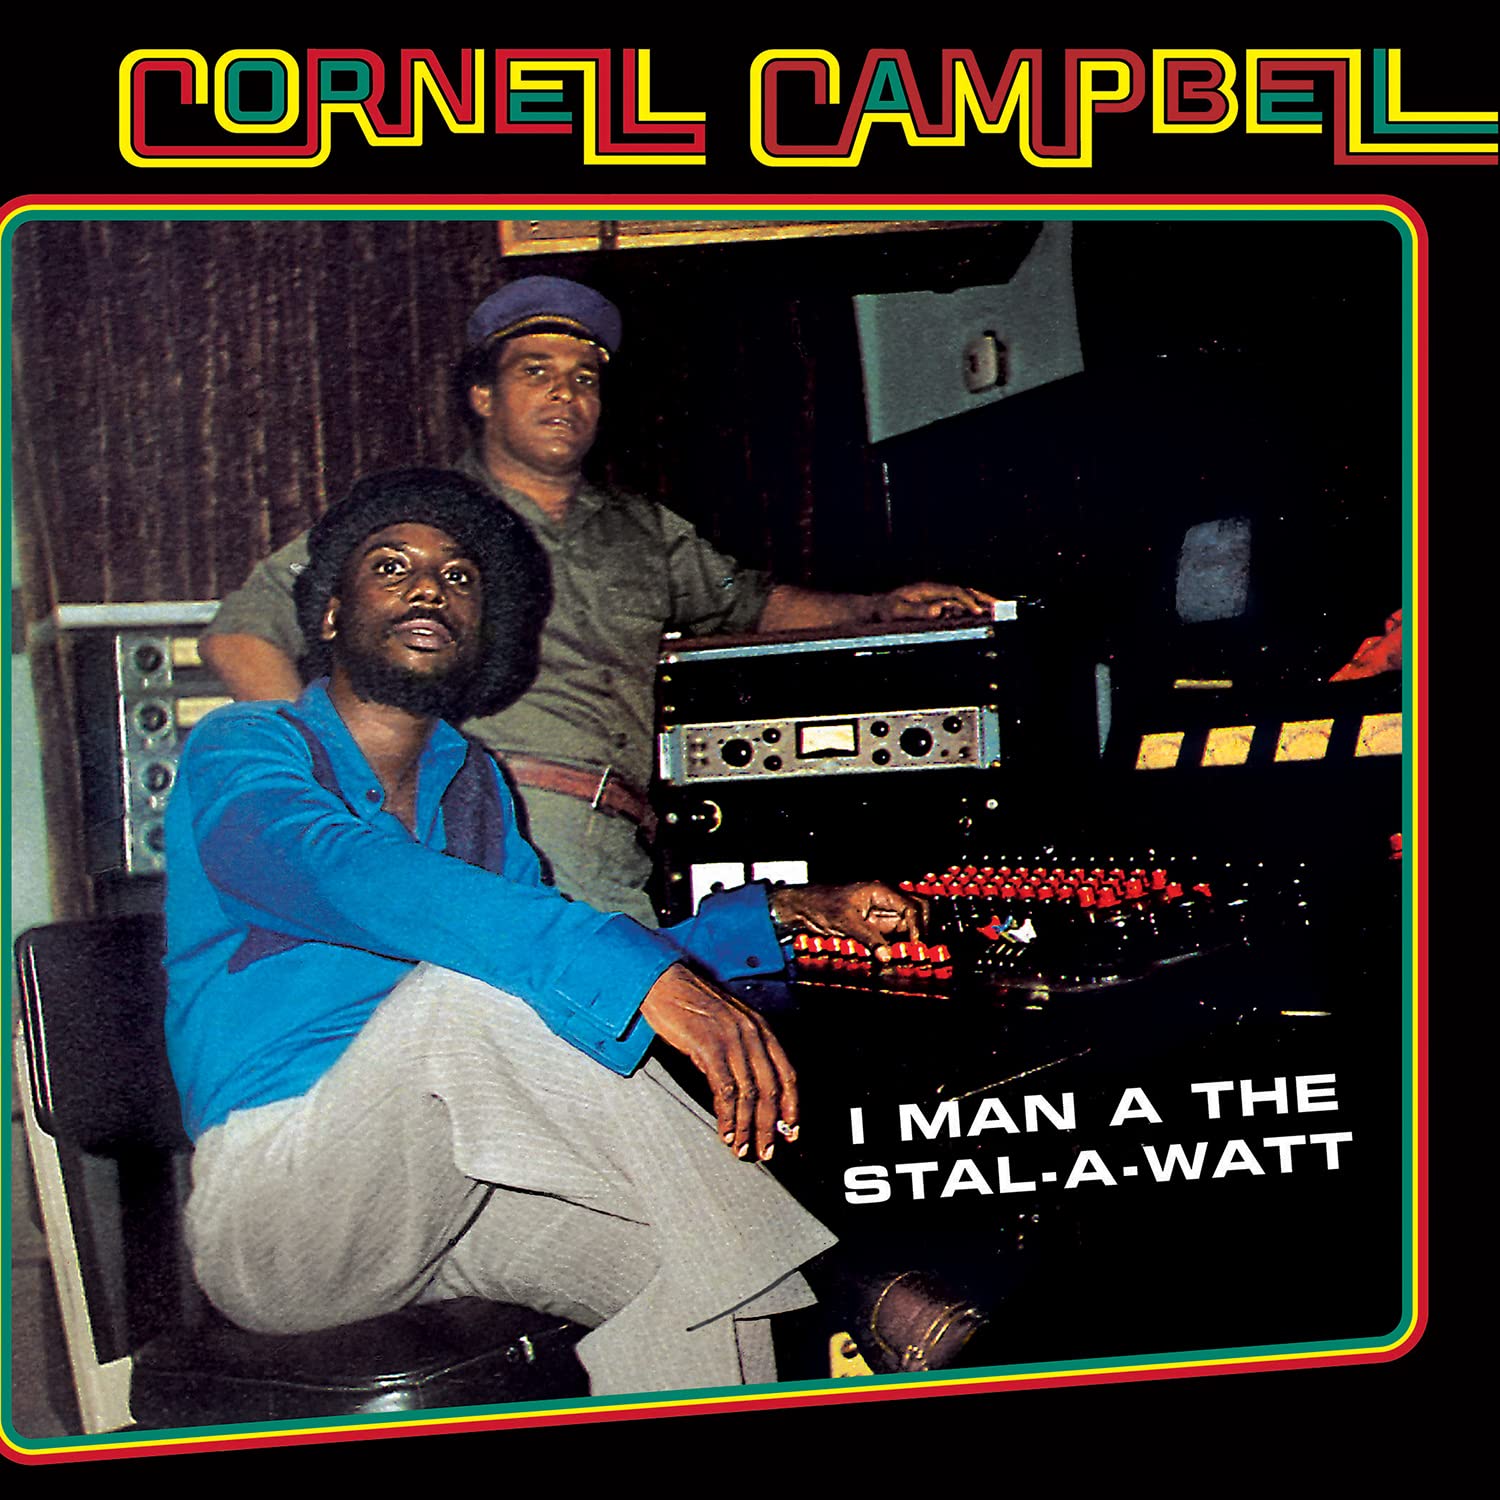 CORNEL CAMPBELL - I MAN A THE STAL-A-WATT Vinyl LP